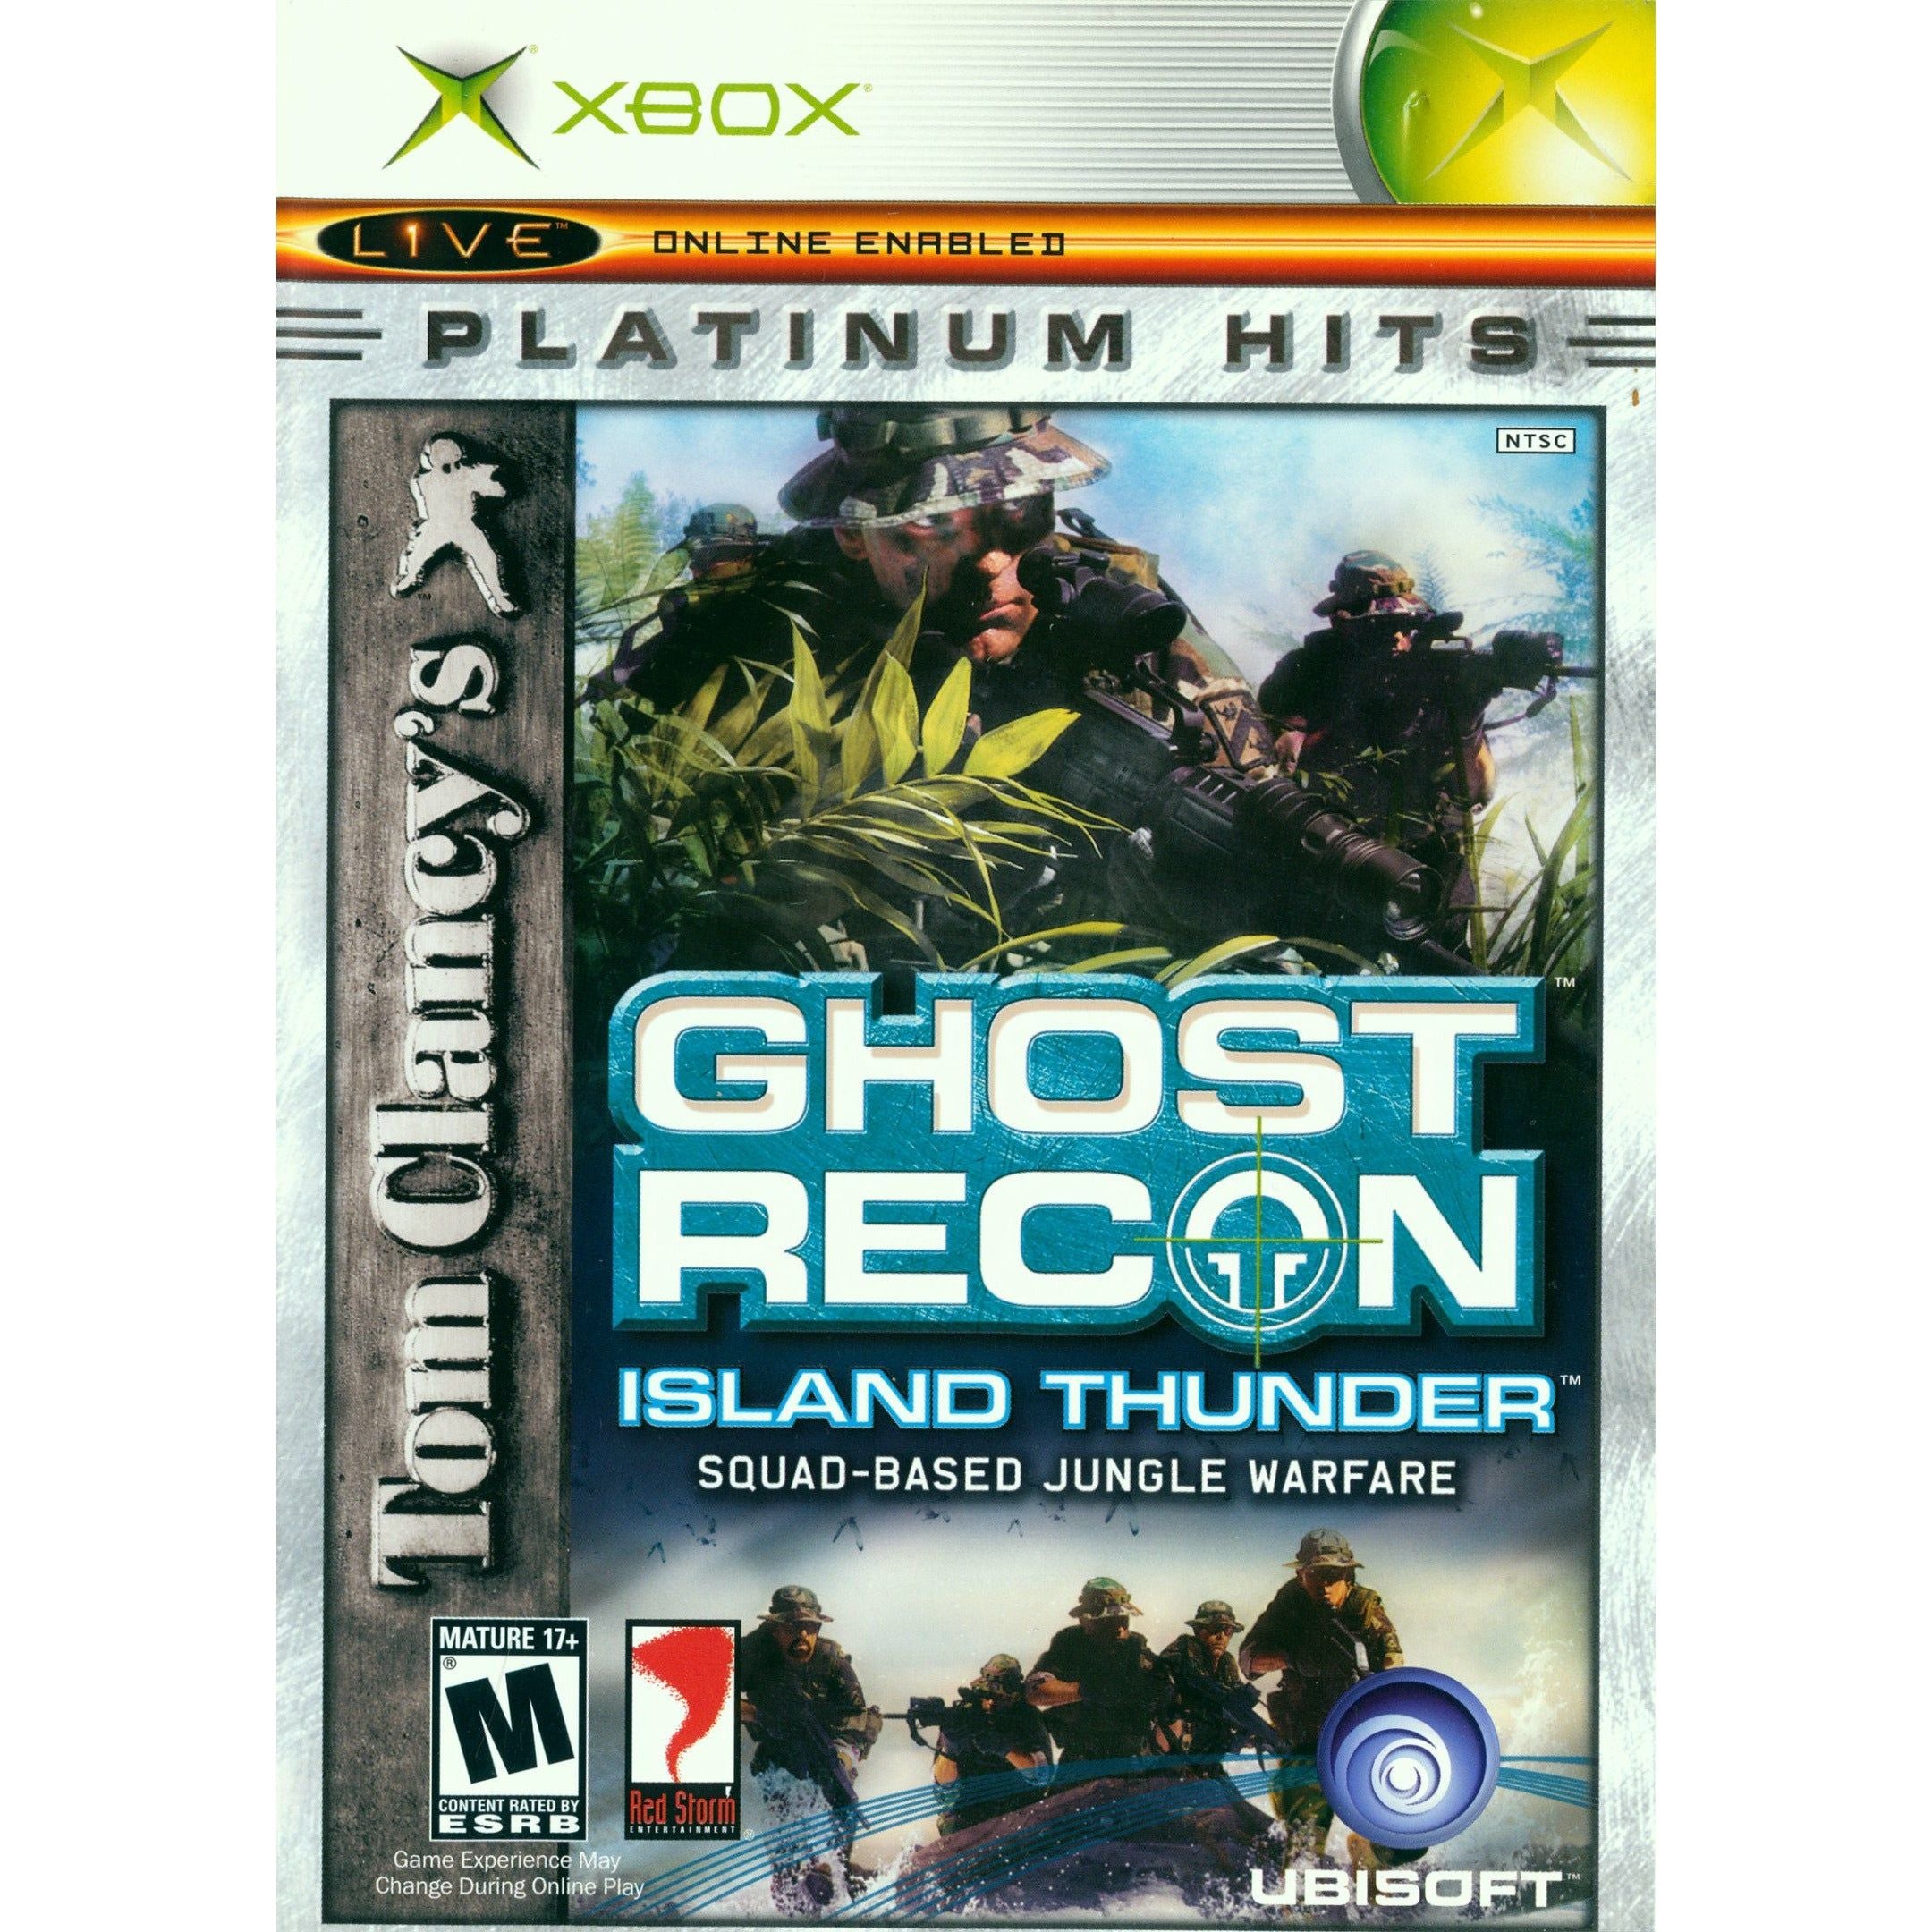 XBOX - Tom Clancy's Ghost Recon Island Thunder (Platinum Hits)